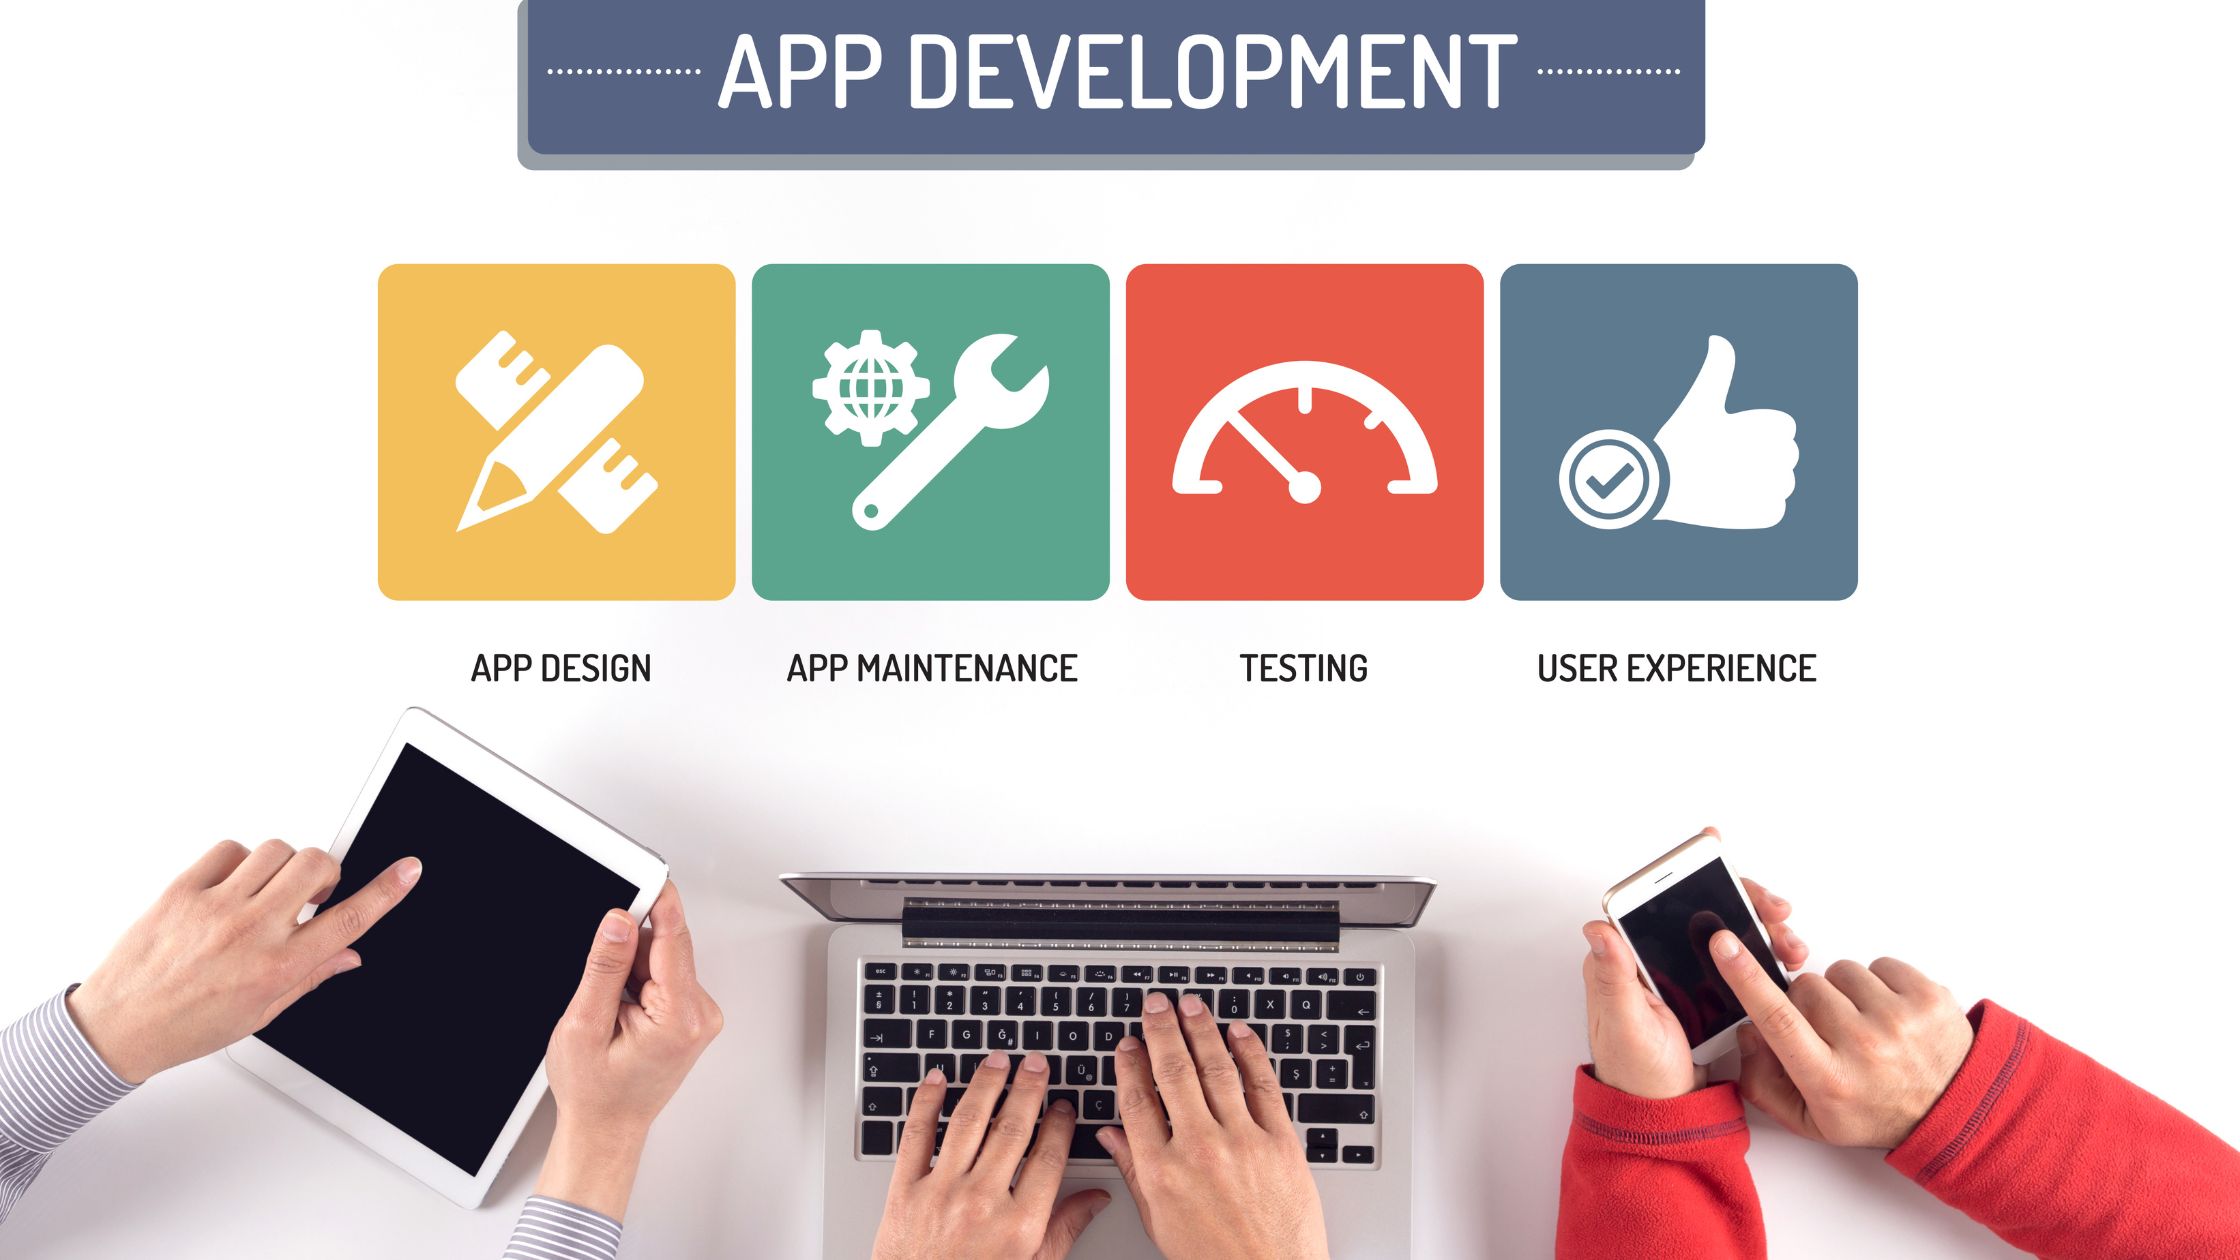 mobile app development companies in bangalore